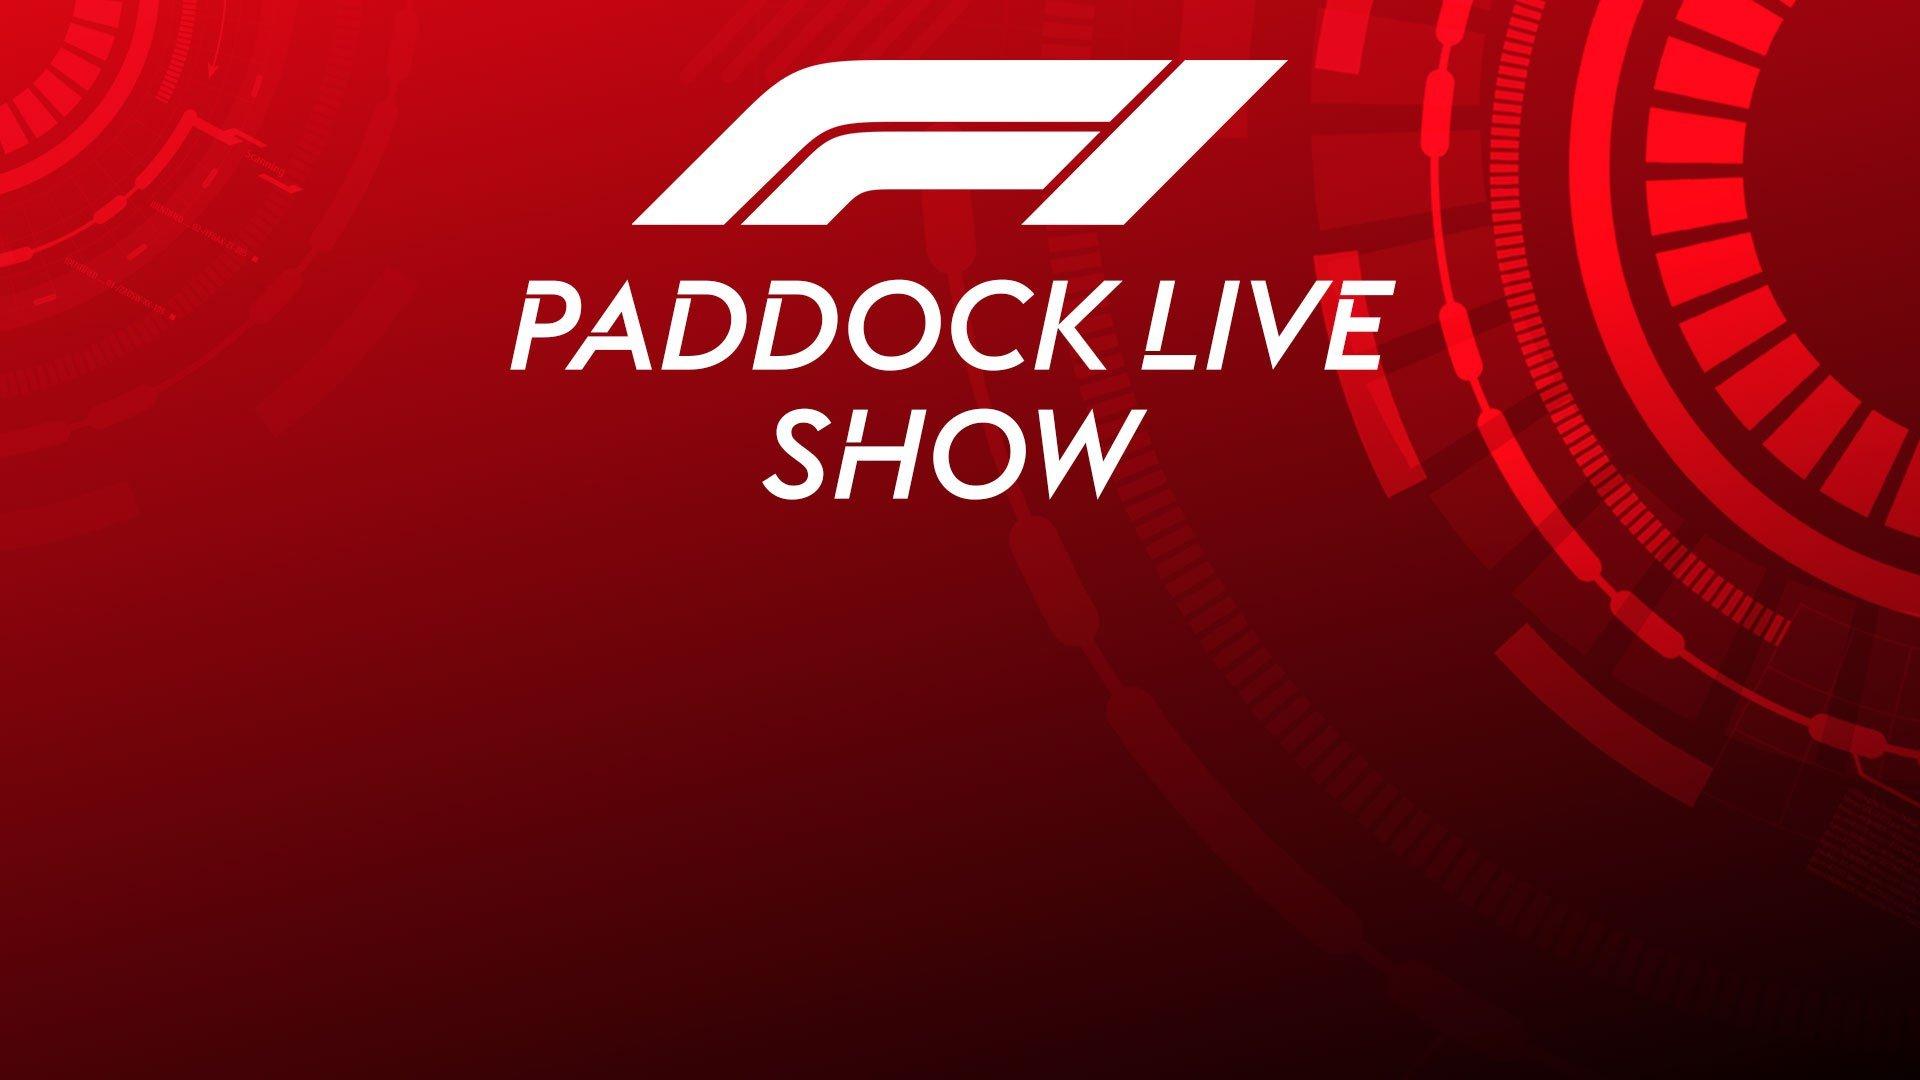 F1 Paddock Live Show